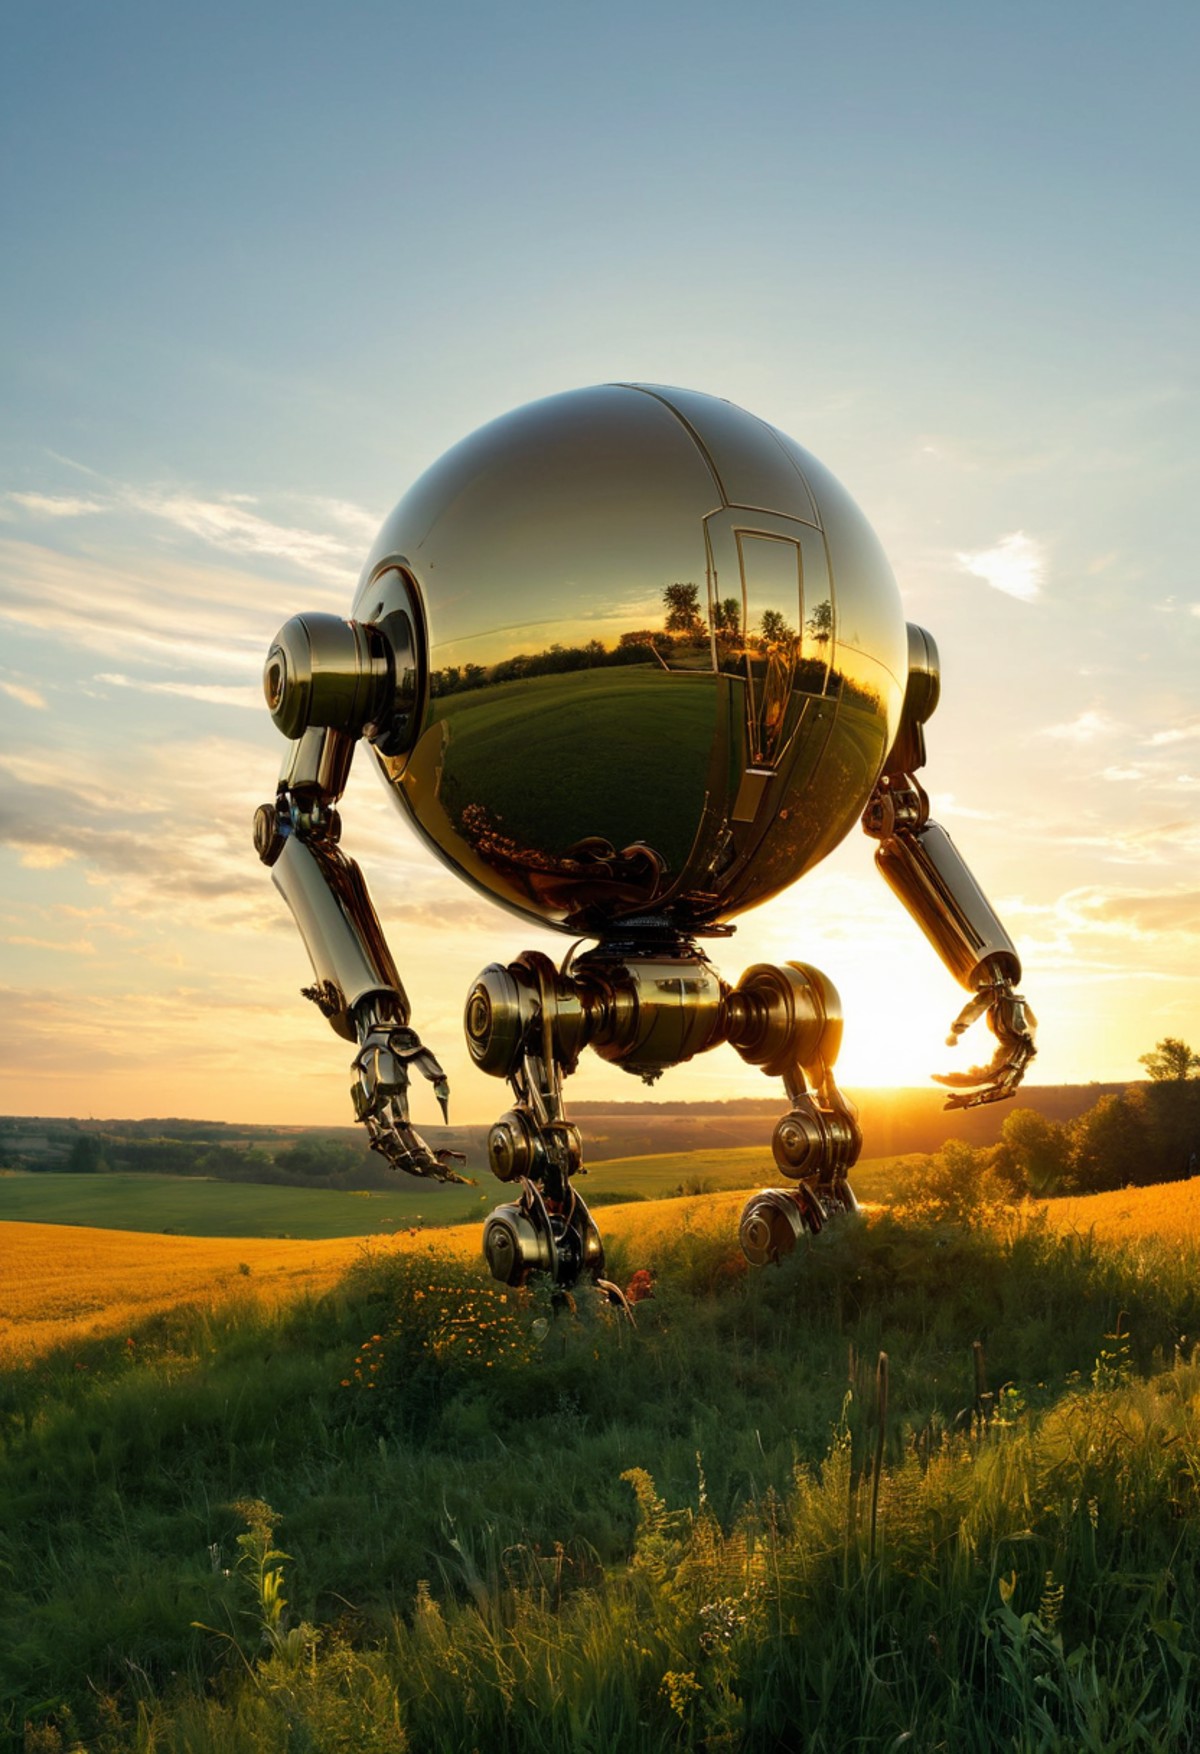 oil paining by Aleksi Briclot and Daniel Gerhartz and Seth Globepainter, beautiful globular robot made of brass, countrysi...